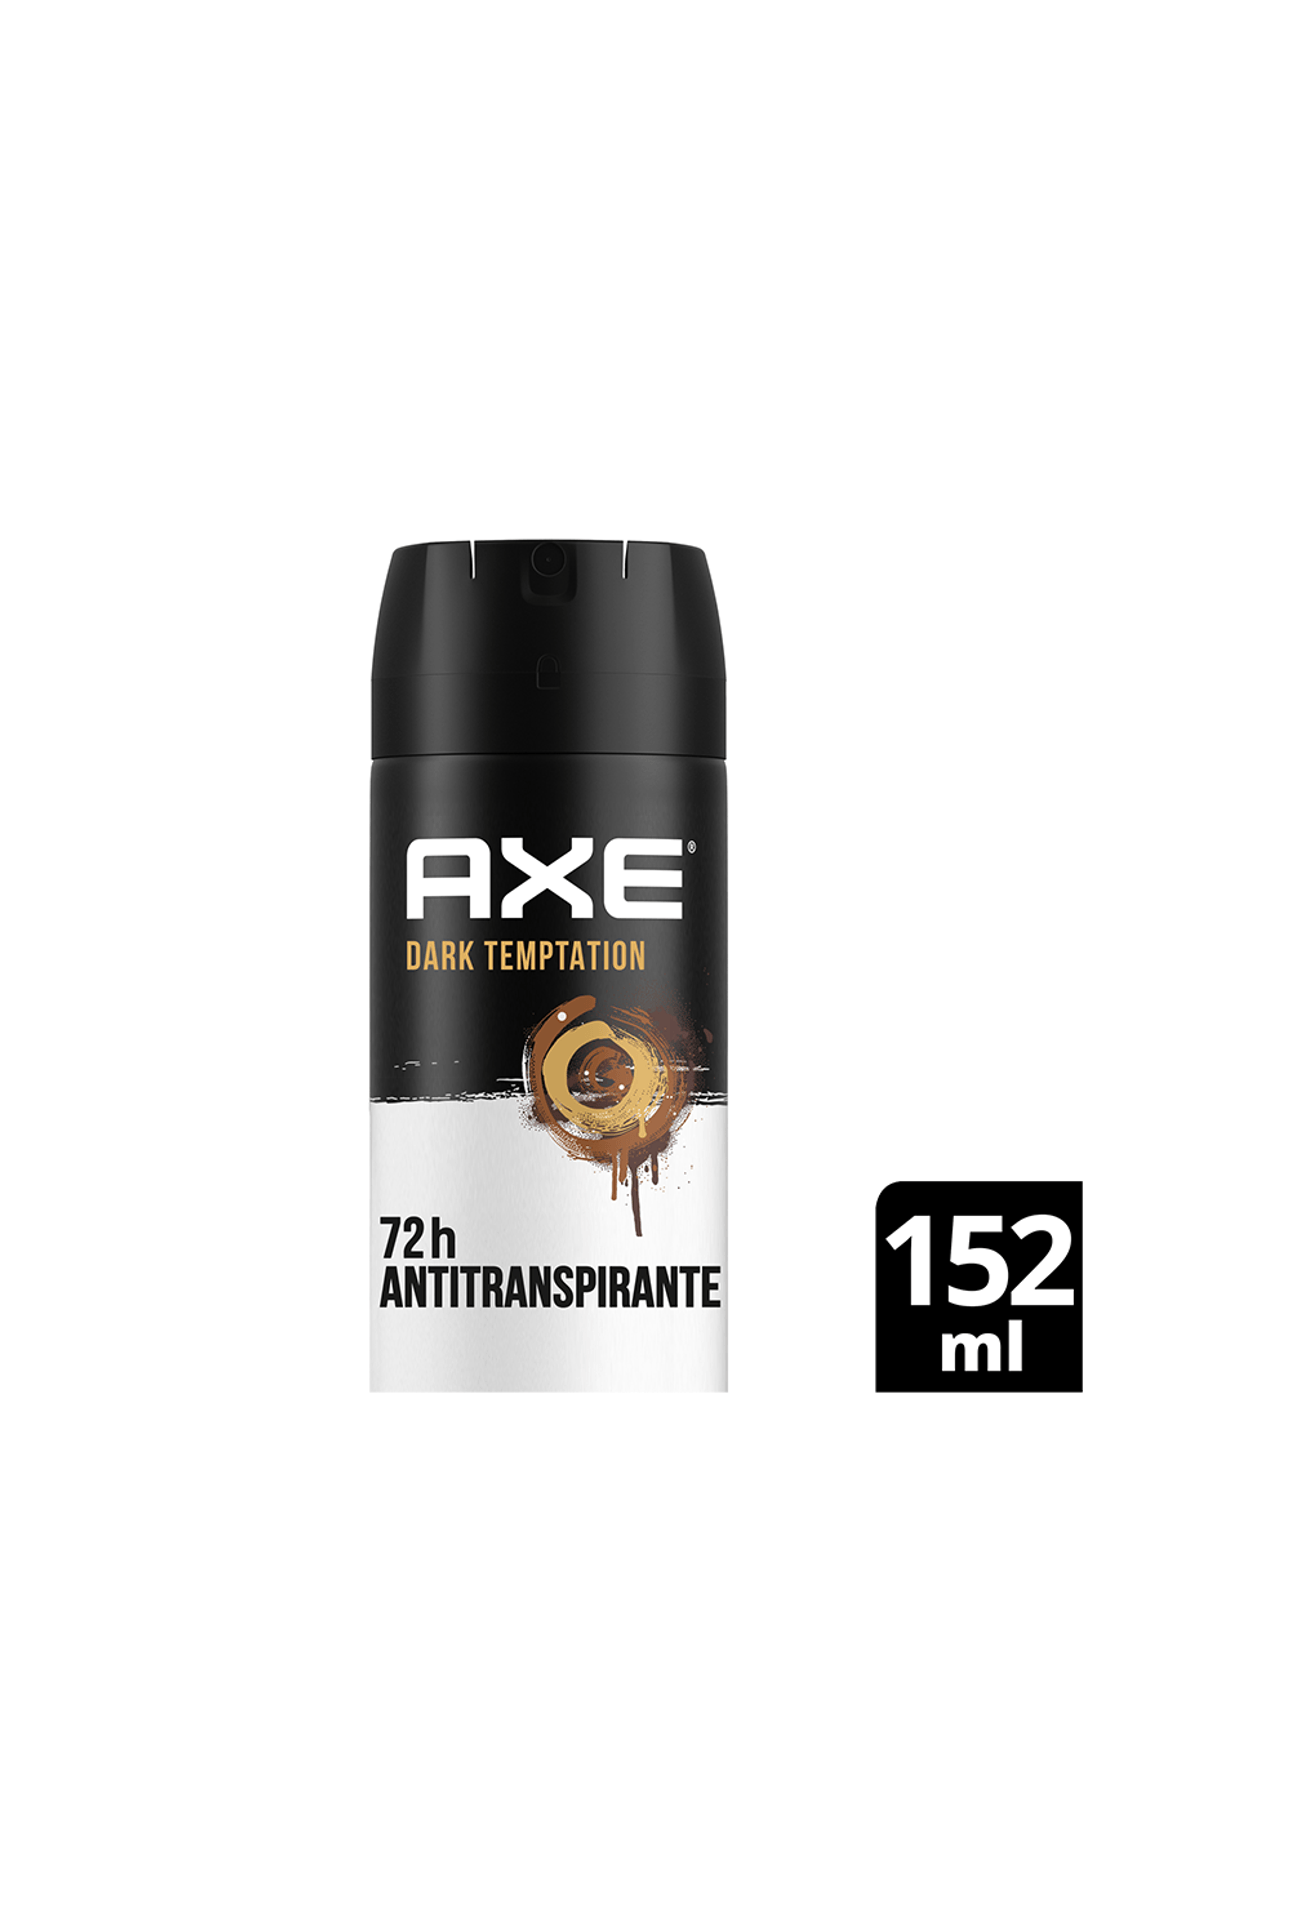 Axe-Antitranspirante-Dark-Temptation-x-152-ml-7791293043722_img1